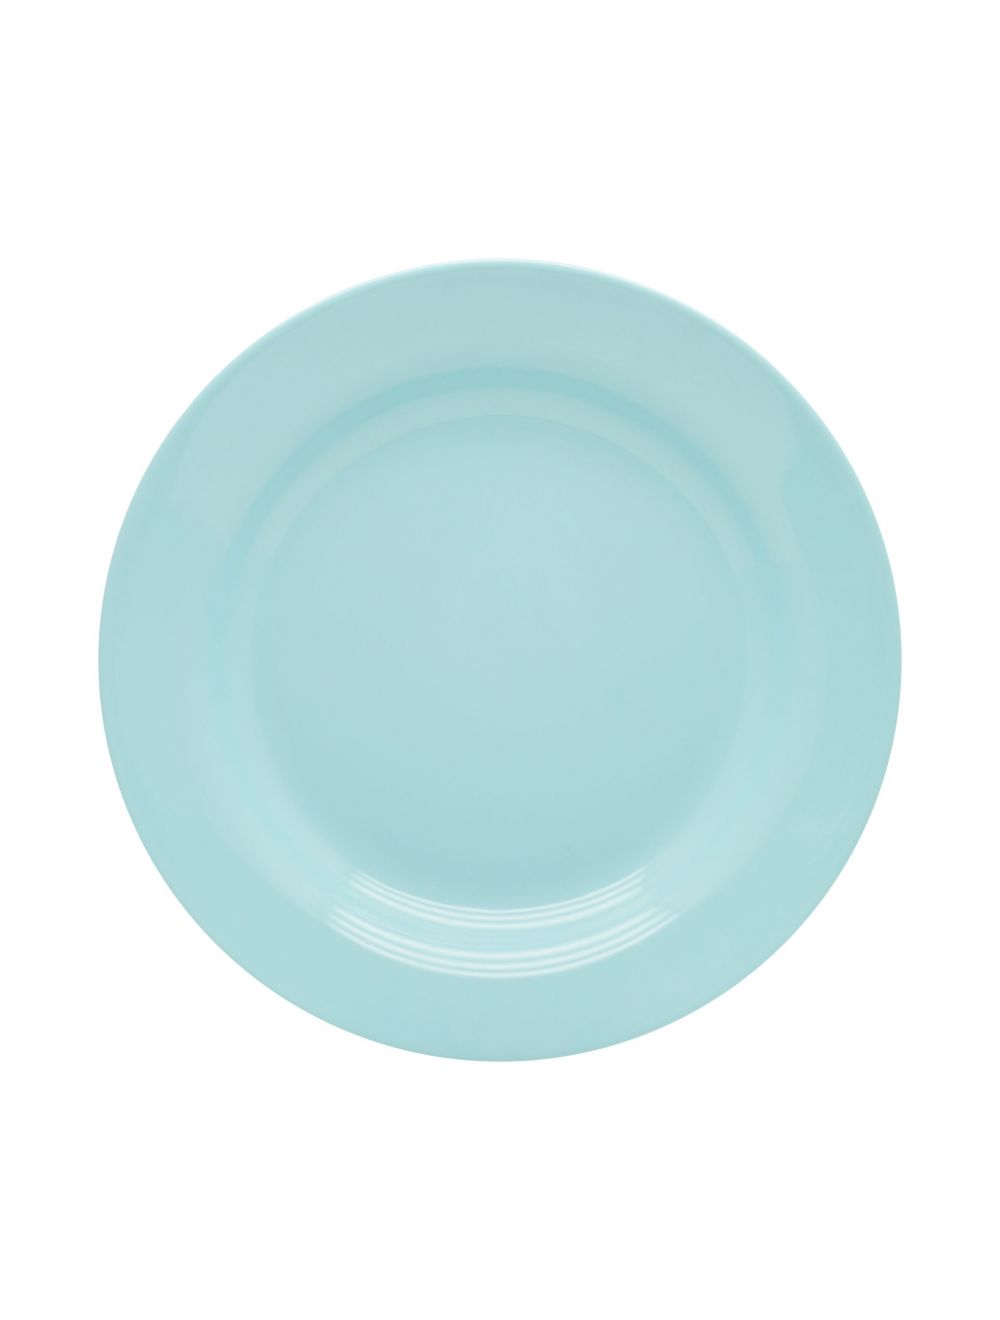 Dinewell Sky Melamine Soup Plate 10.5